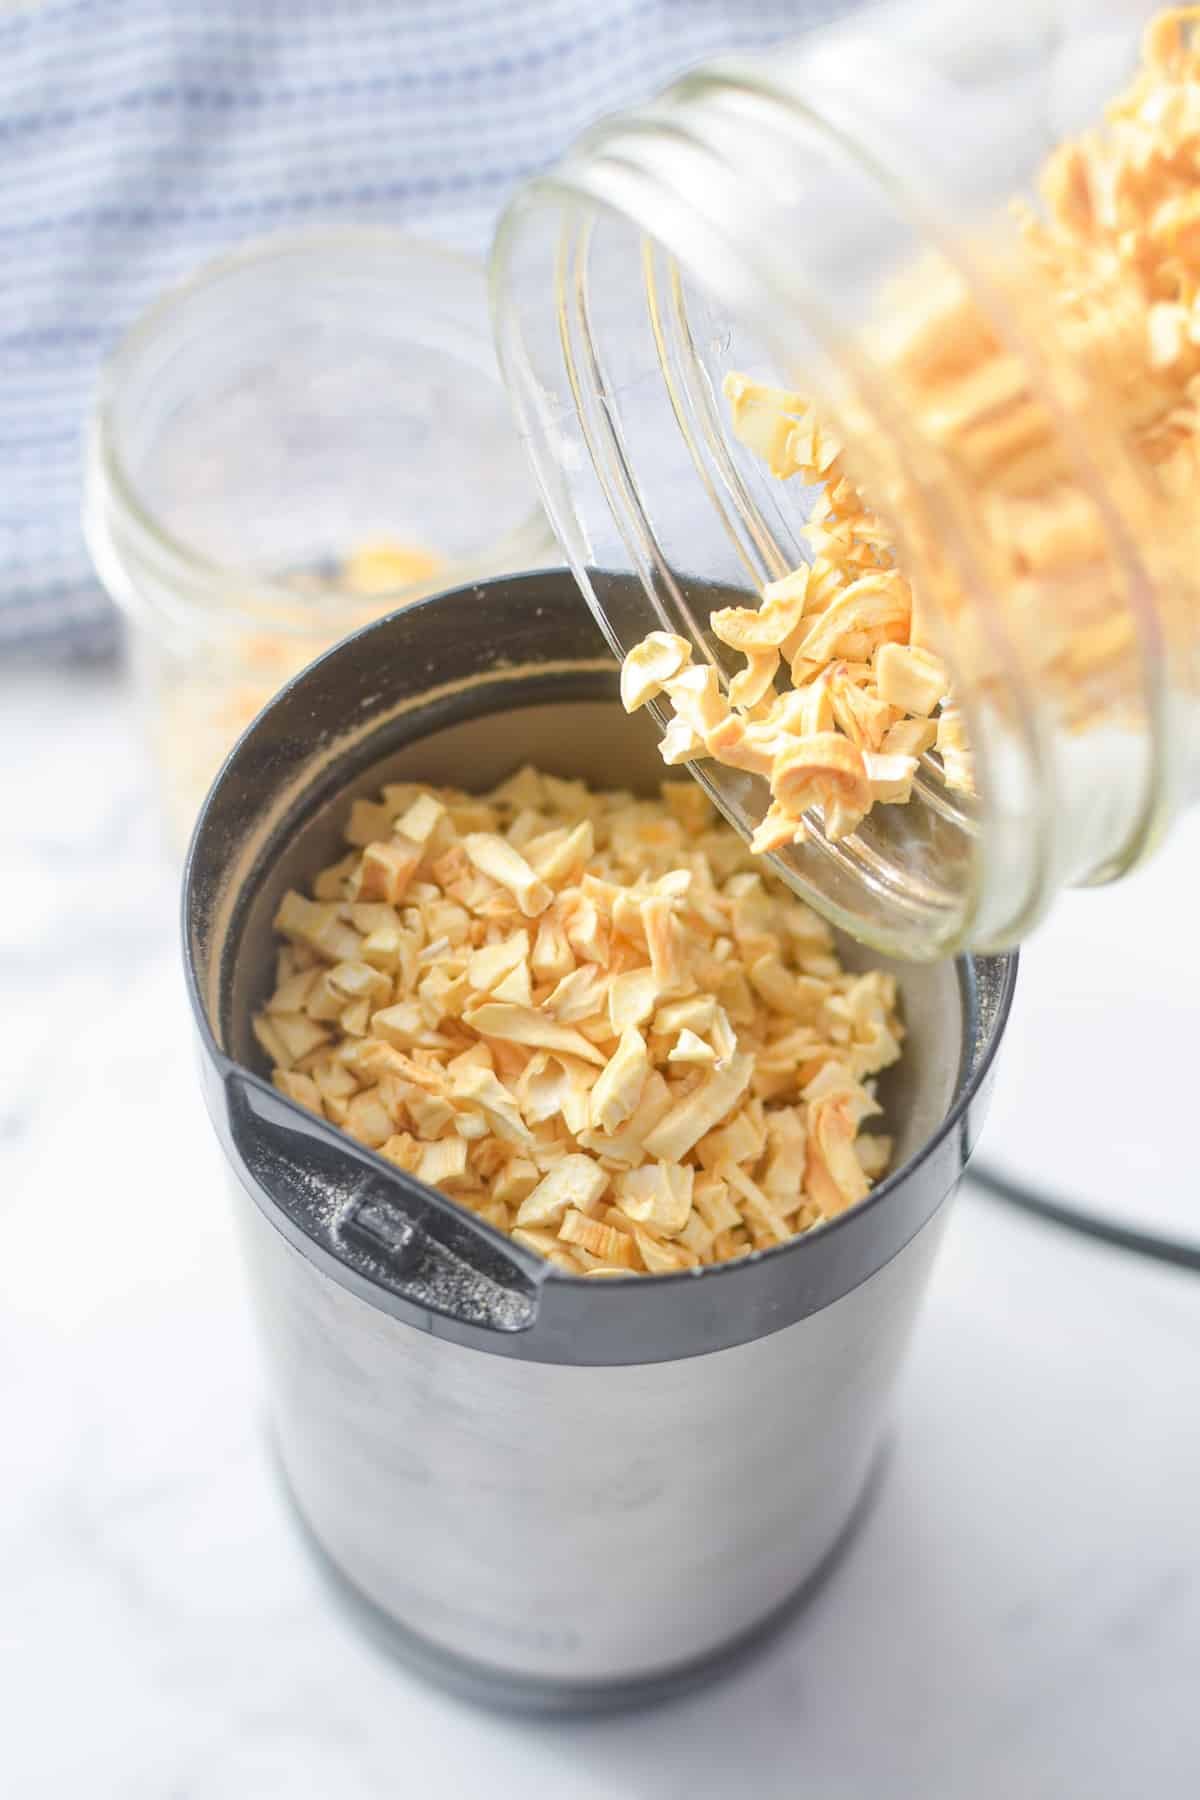 Adding dried garlic to a coffee grinder to make powder.